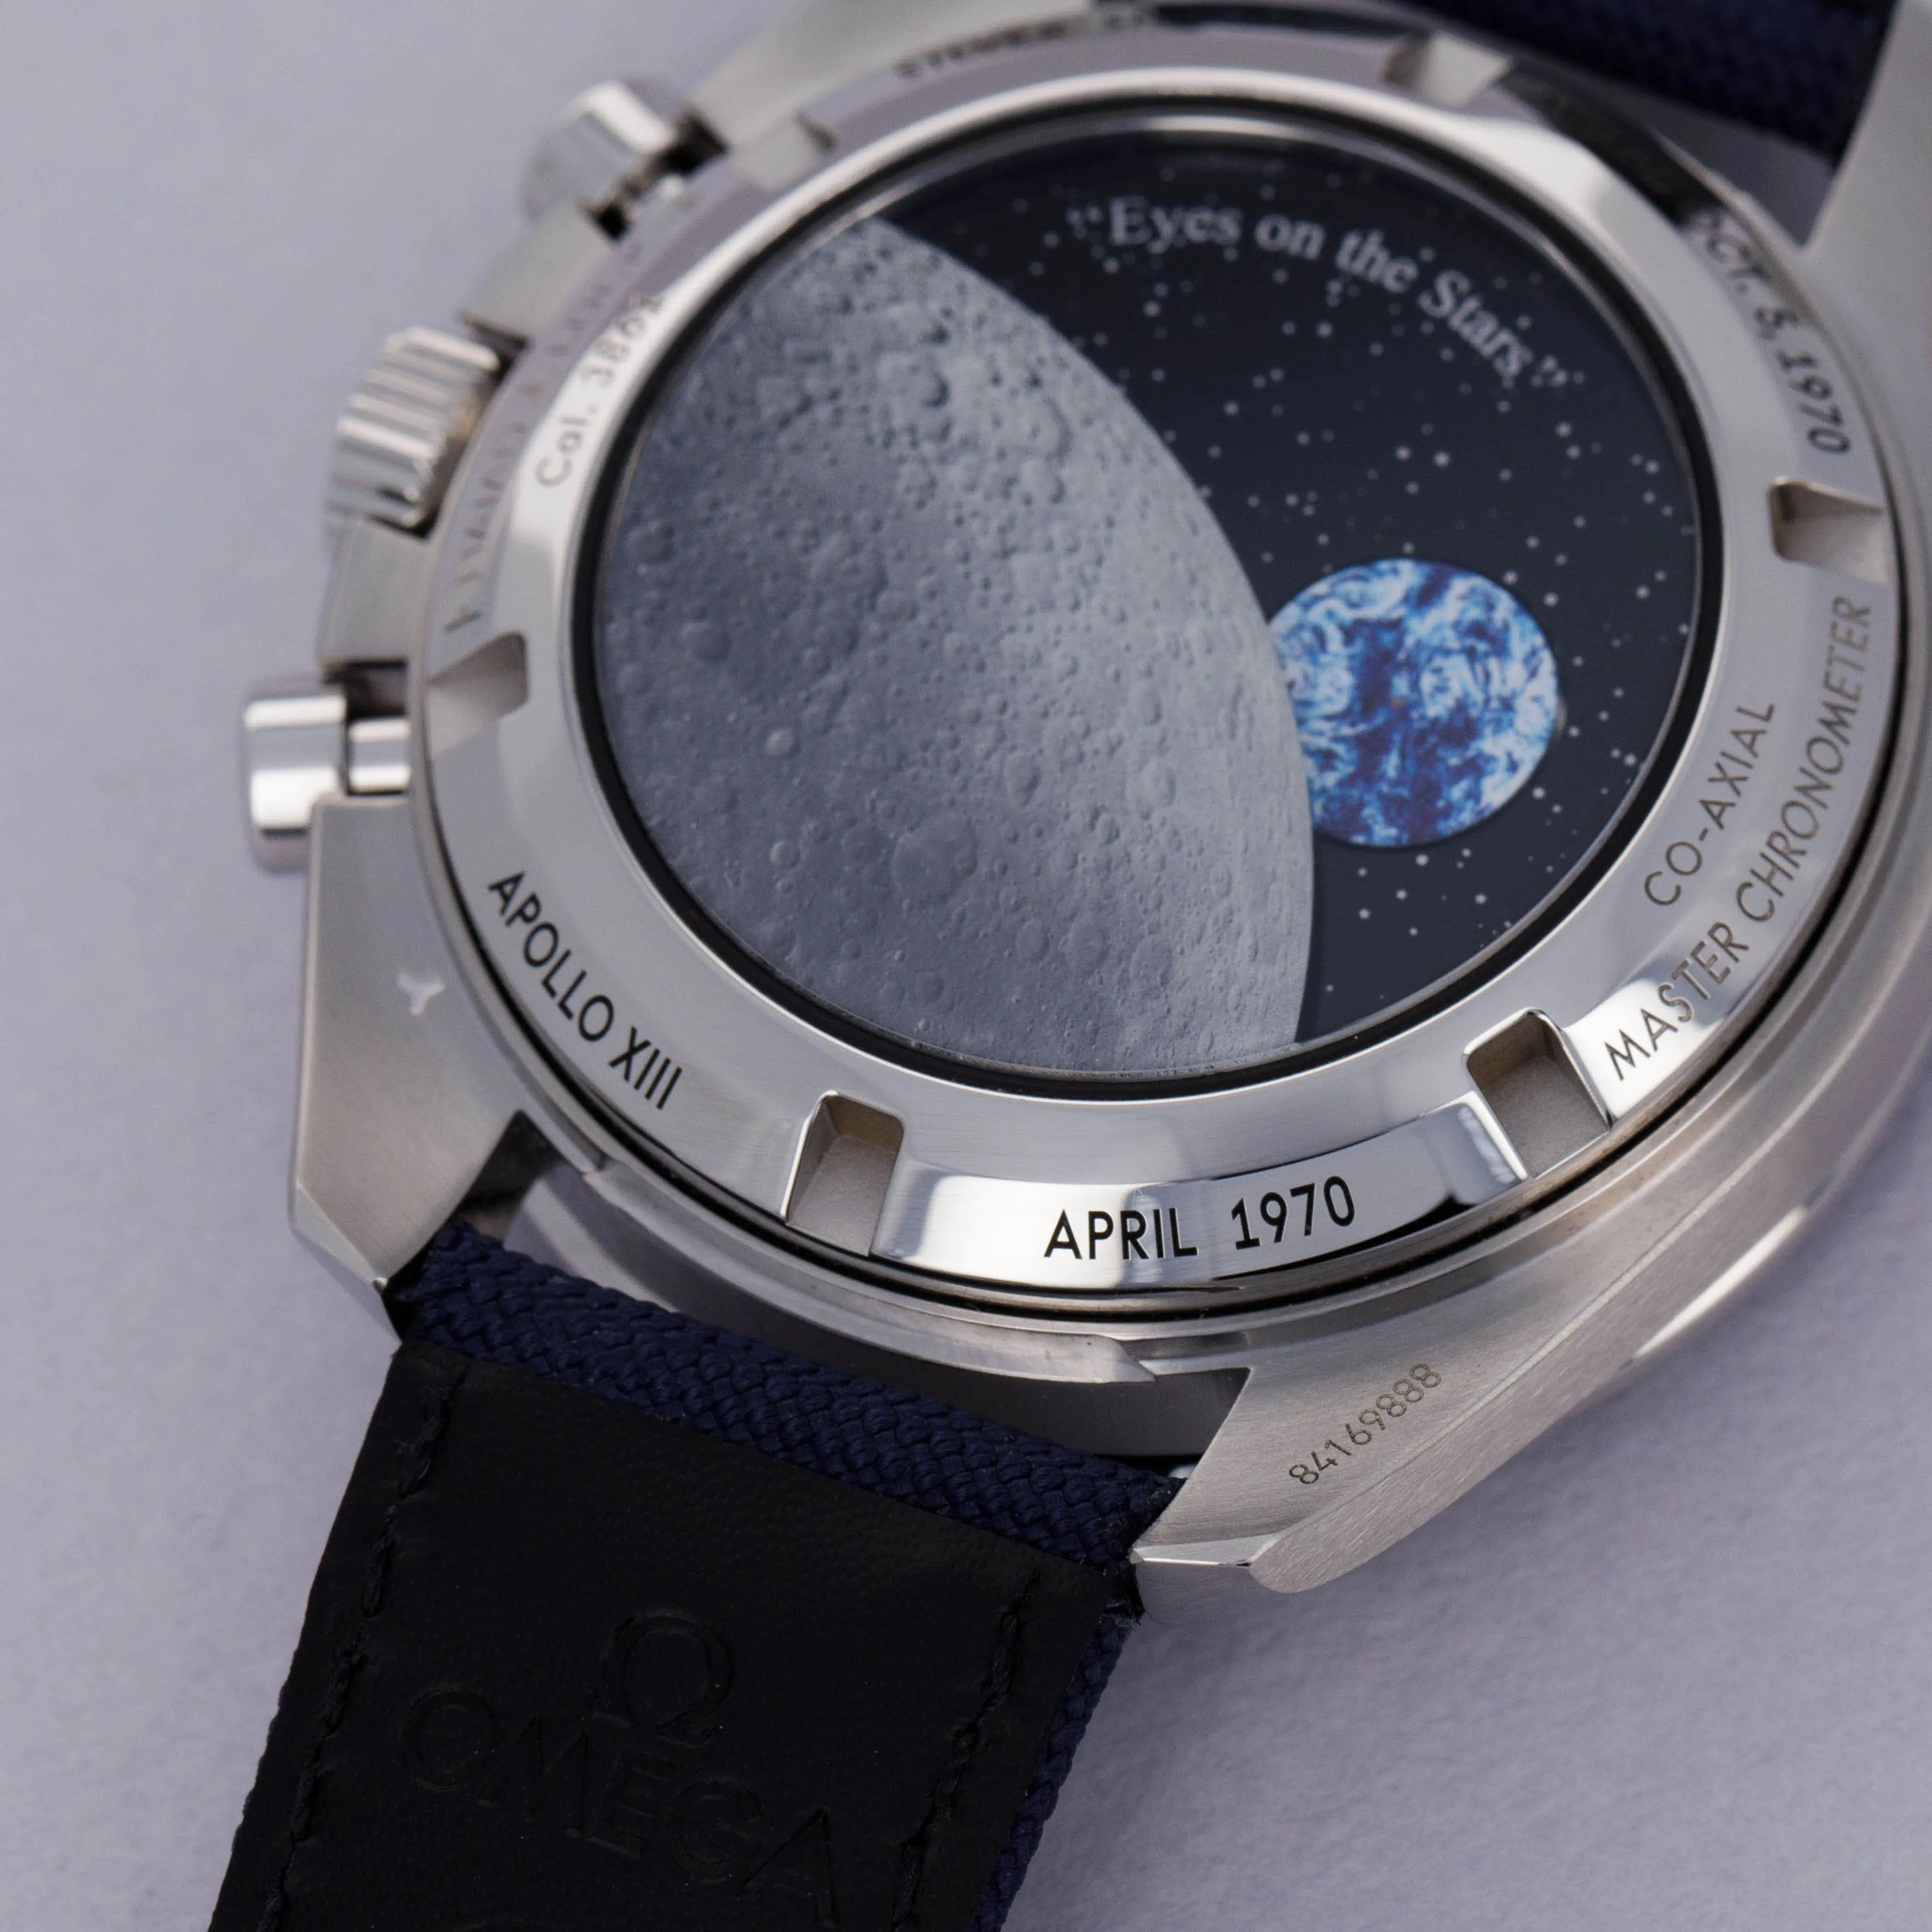 Omega Speedmaster Moon watch 310.32.42.50.02.001 42mm Stainless steel Silver 4